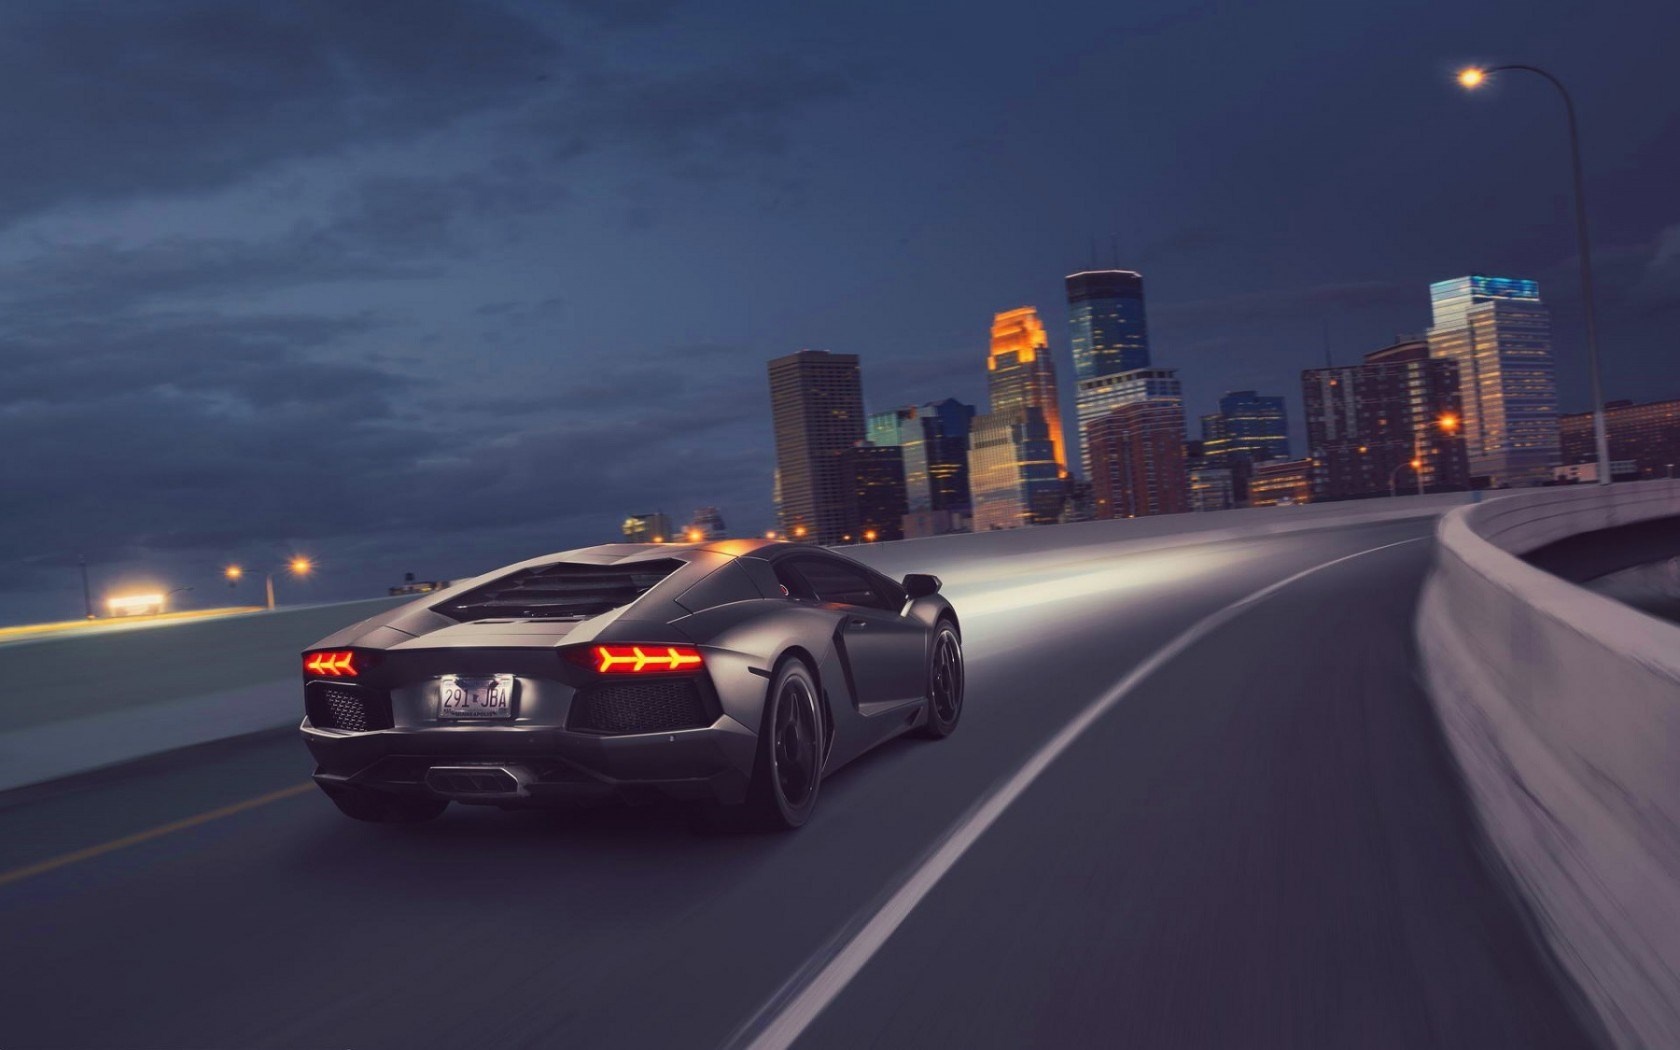 Lamborghini Aventador LP 700-4 Supercar Night City Wallpapers